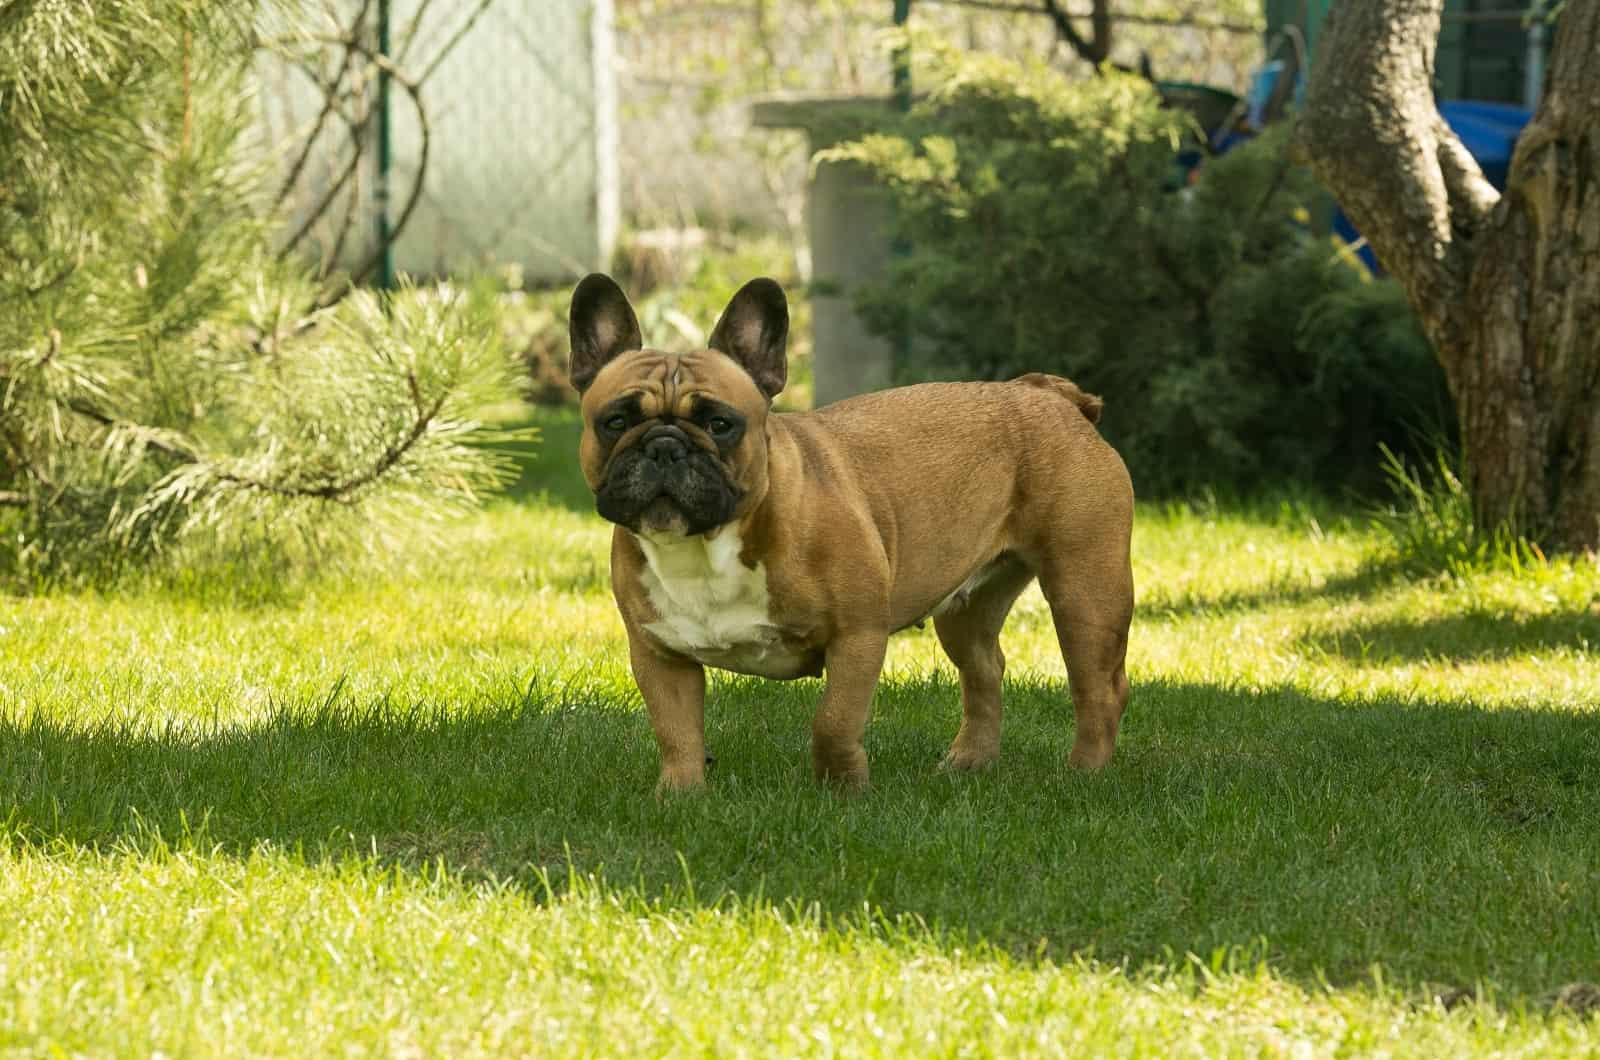 French Bulldog standing on grass